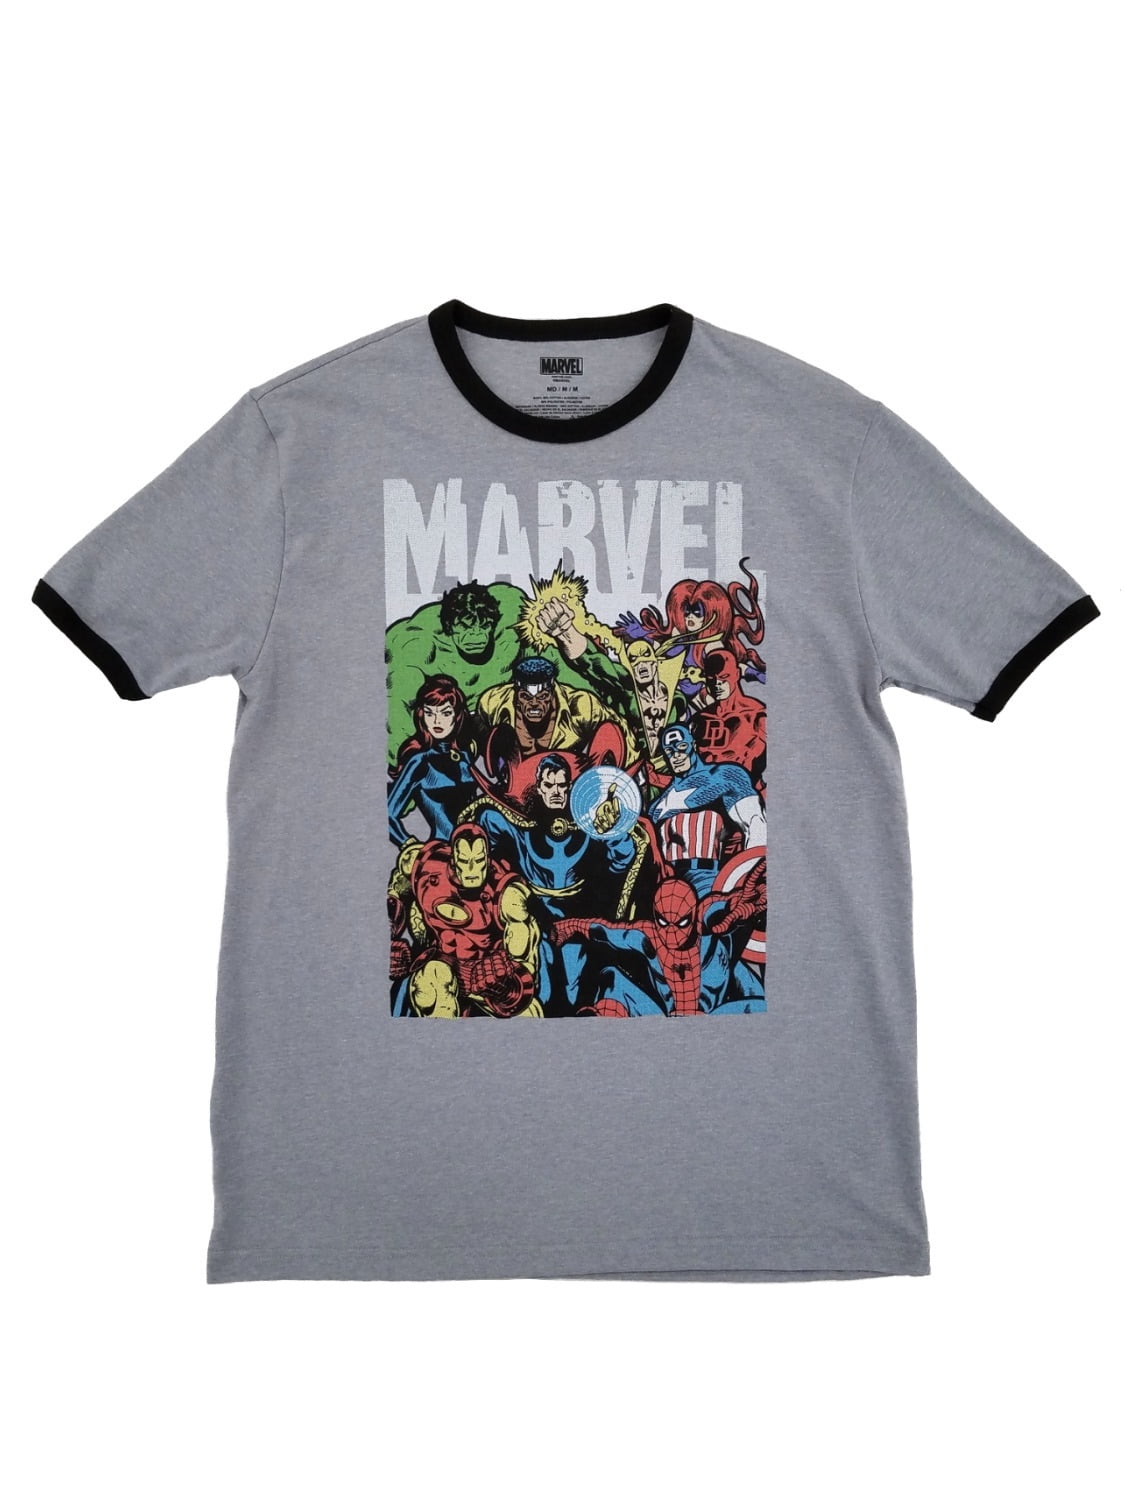 BOY'S OFFICIAL  marvel heros comics avengers T Shirts JUST £2.99 